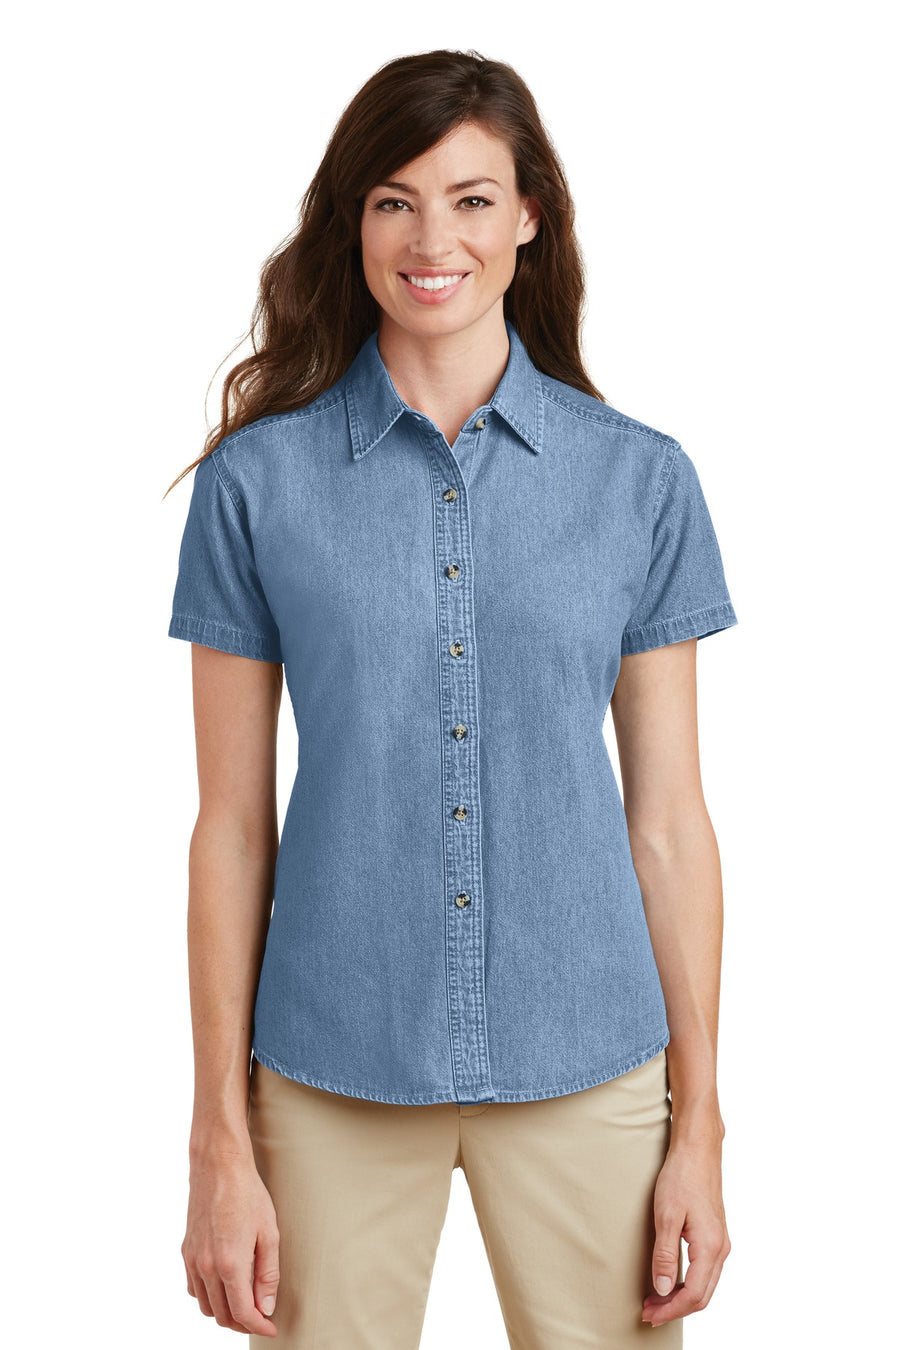 Port & Company - Short Sleeve Value Denim Shirt.